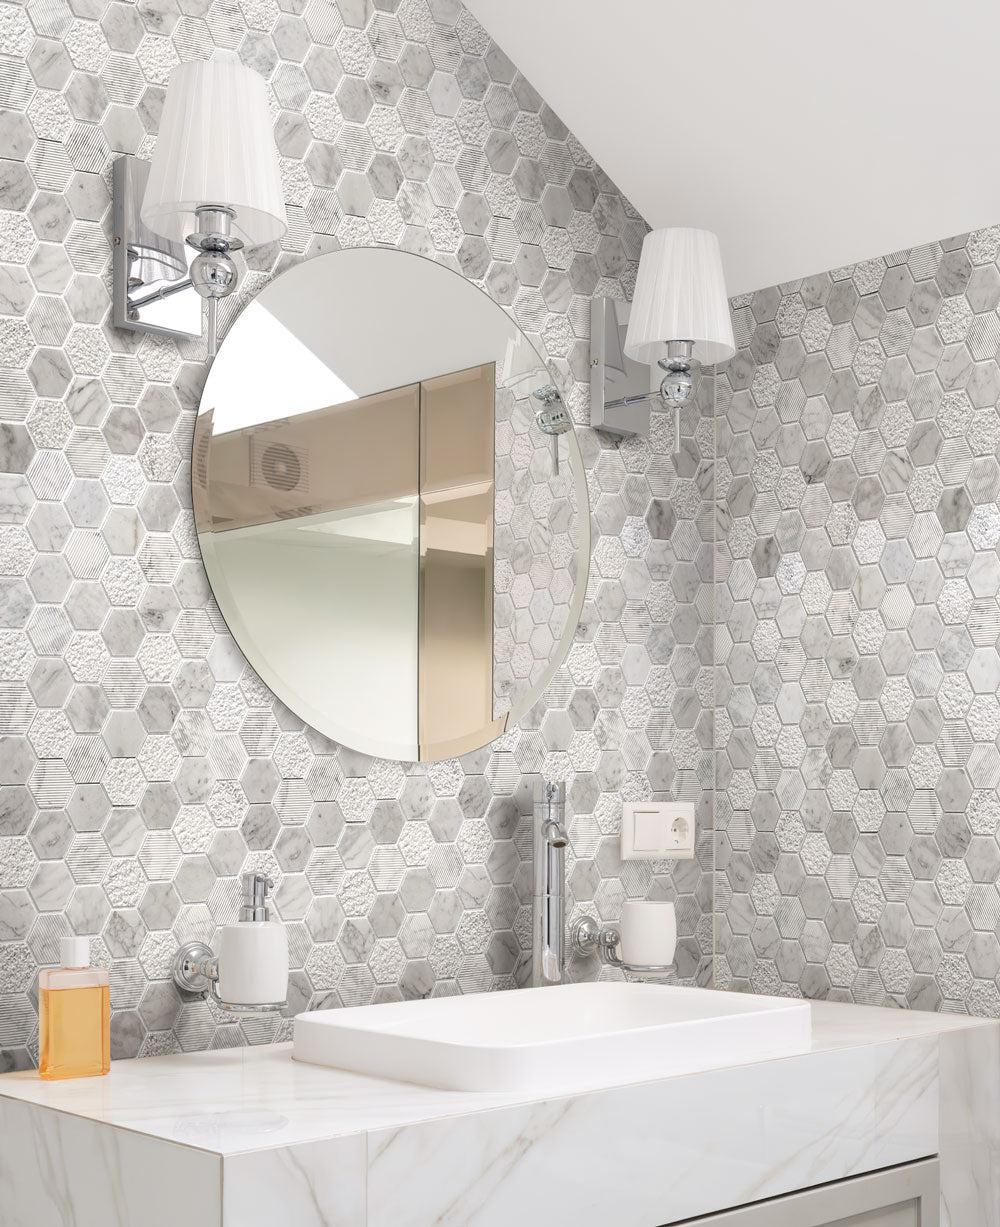 Bathroom in the attic with Textured Carrara Honeycomb Hexagon Marble Mosaic Tile walls